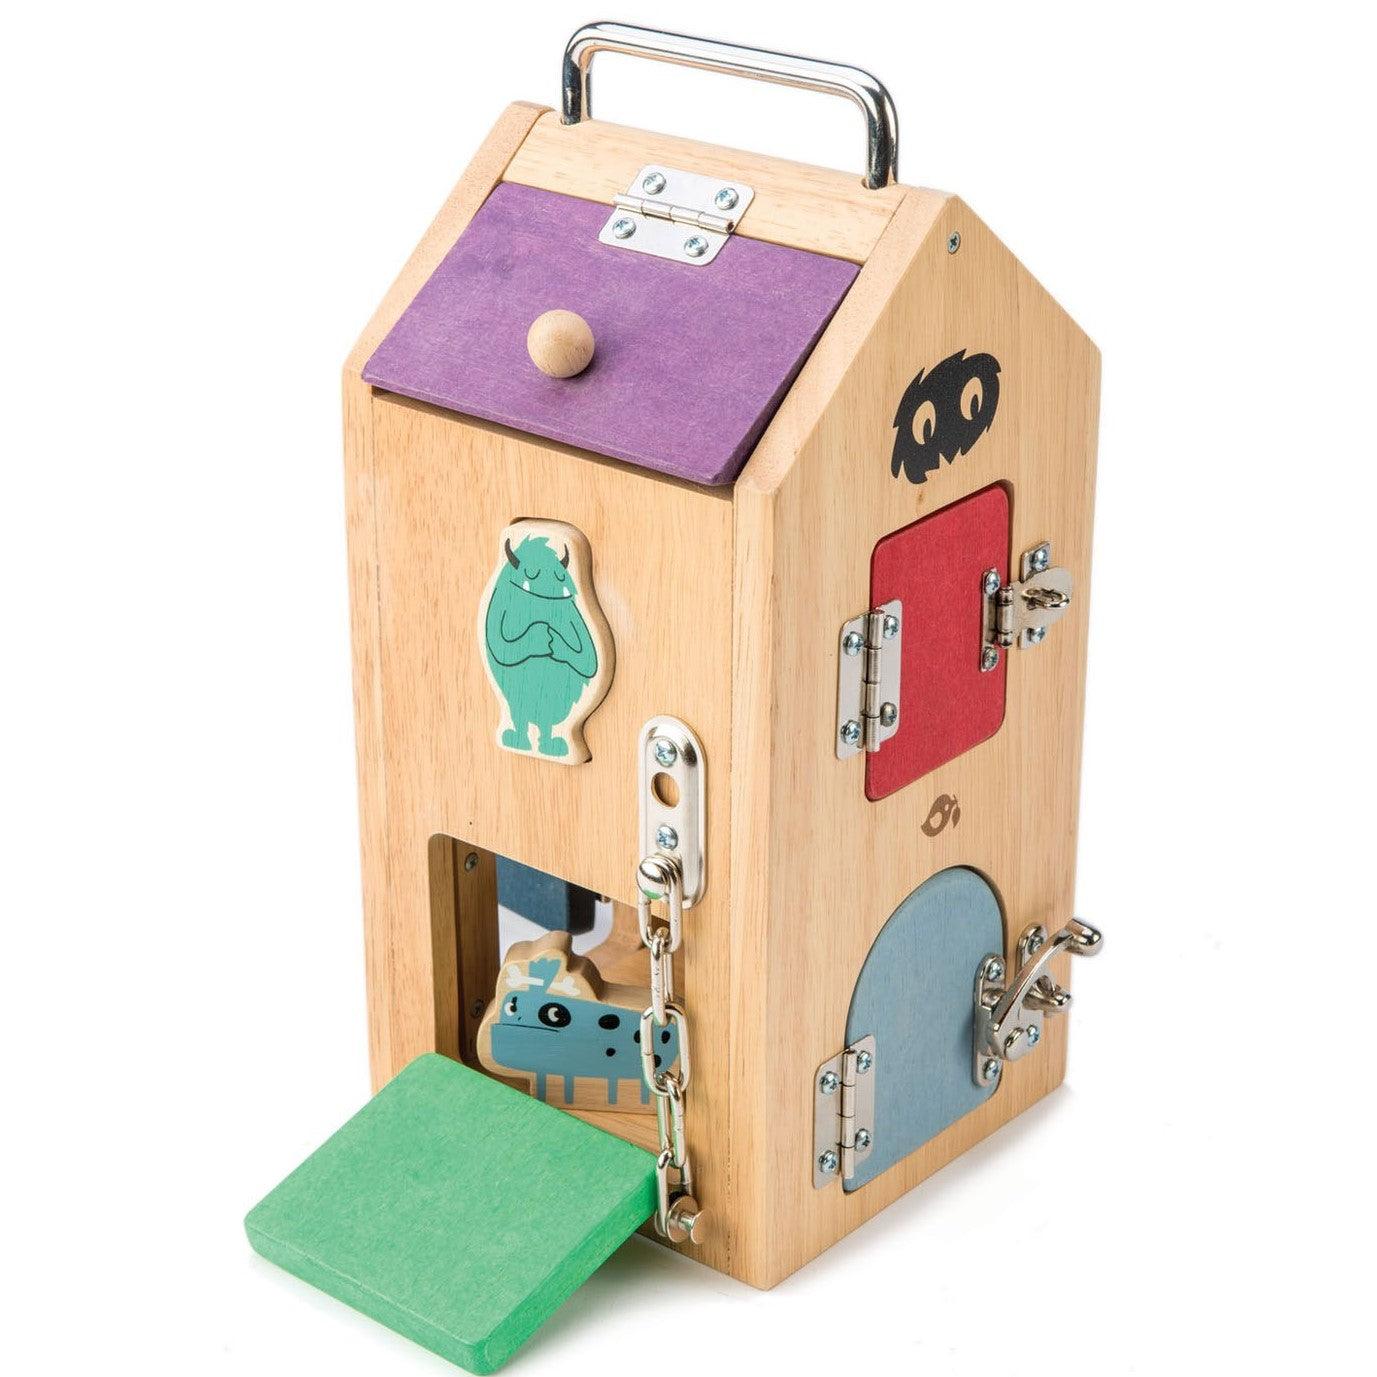 Tender Leaf Toys: Monster Lock Box manipulative house with locks